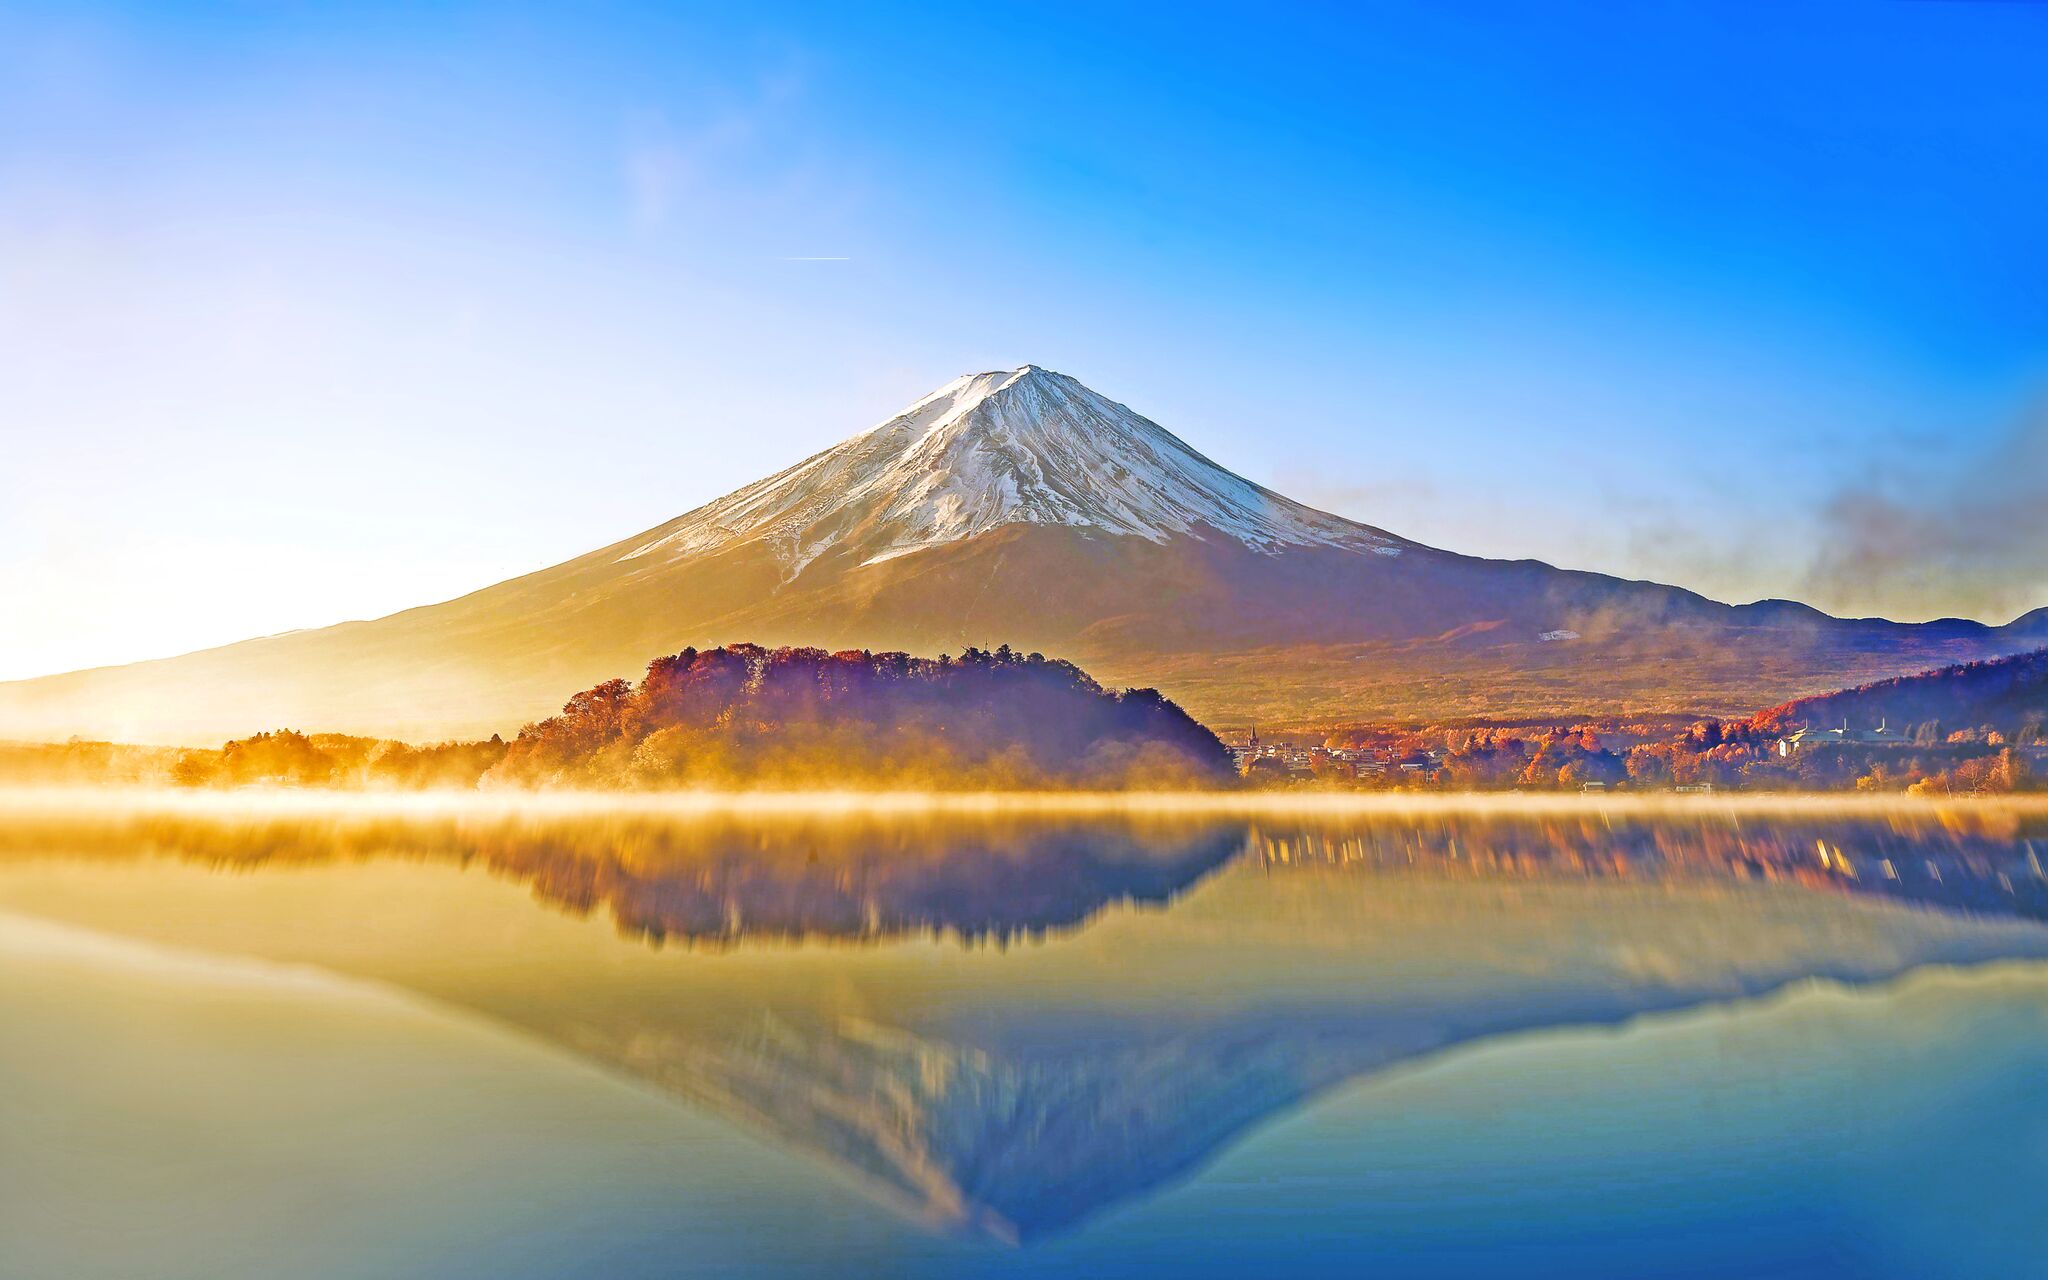 General 2048x1280 nature Mount Fuji landscape sunrise reflection mountains volcano mist lake snowy peak